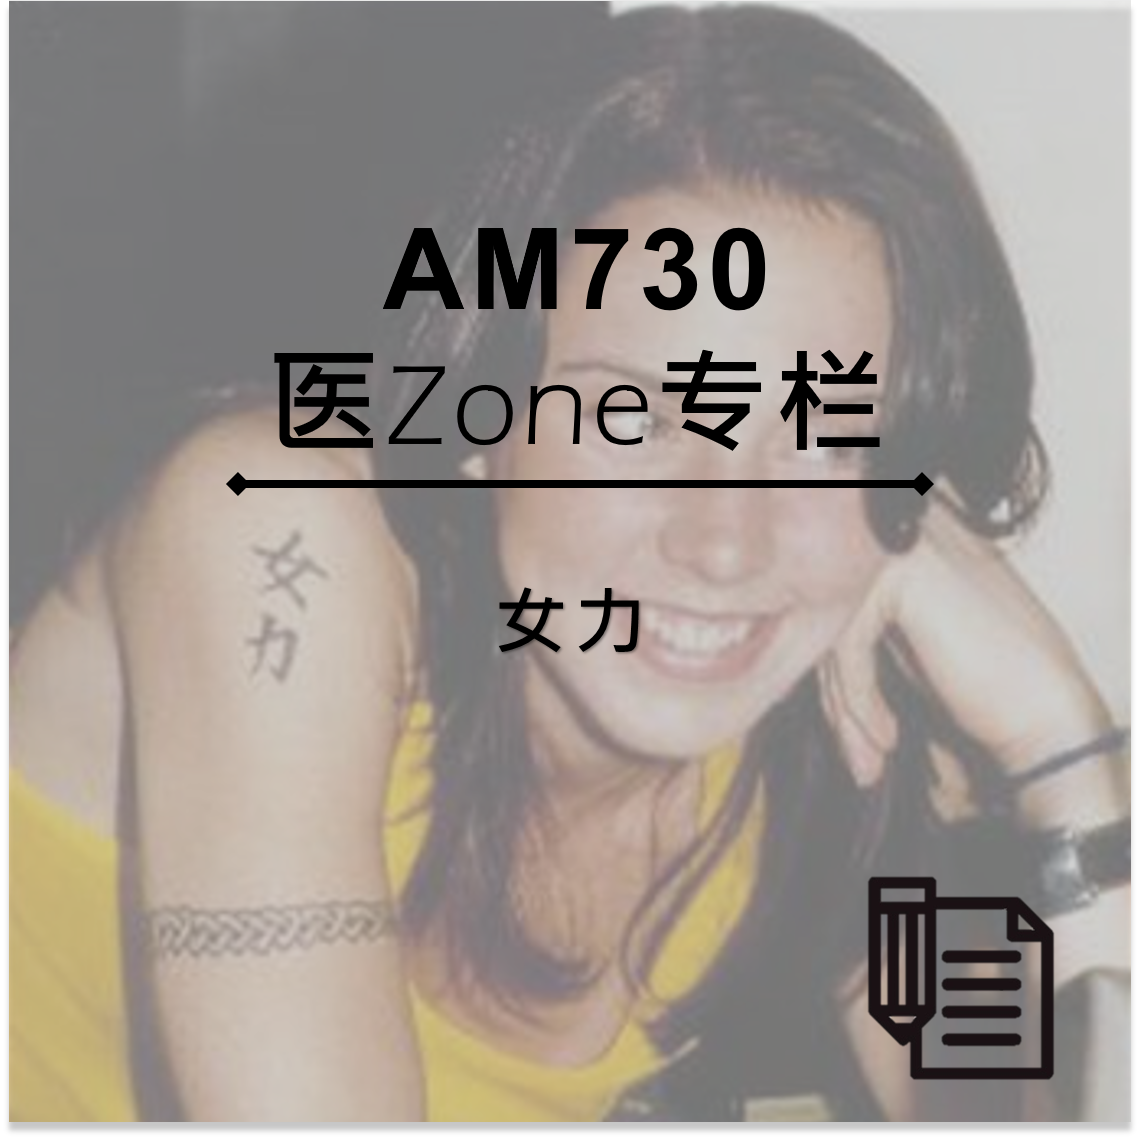 AM730 医Zone专栏 - 女力